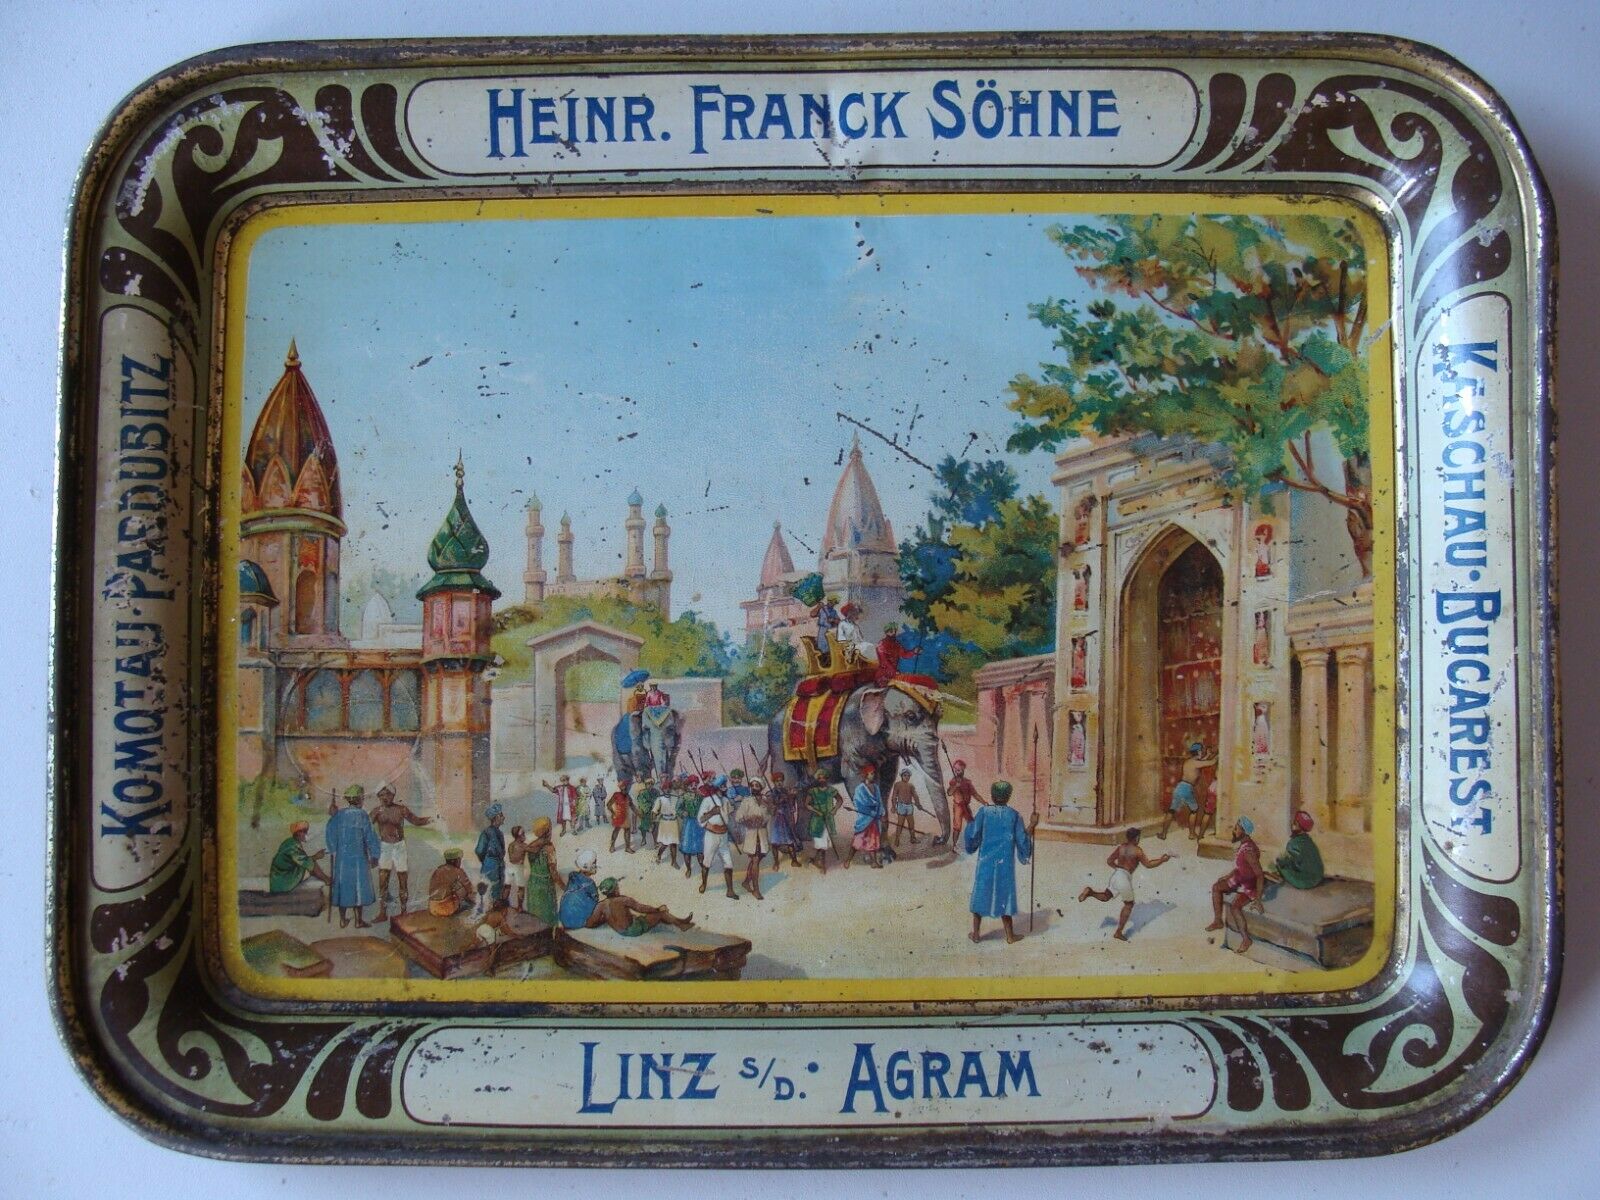 Franck Söhne Linz Werbetablett um 1900